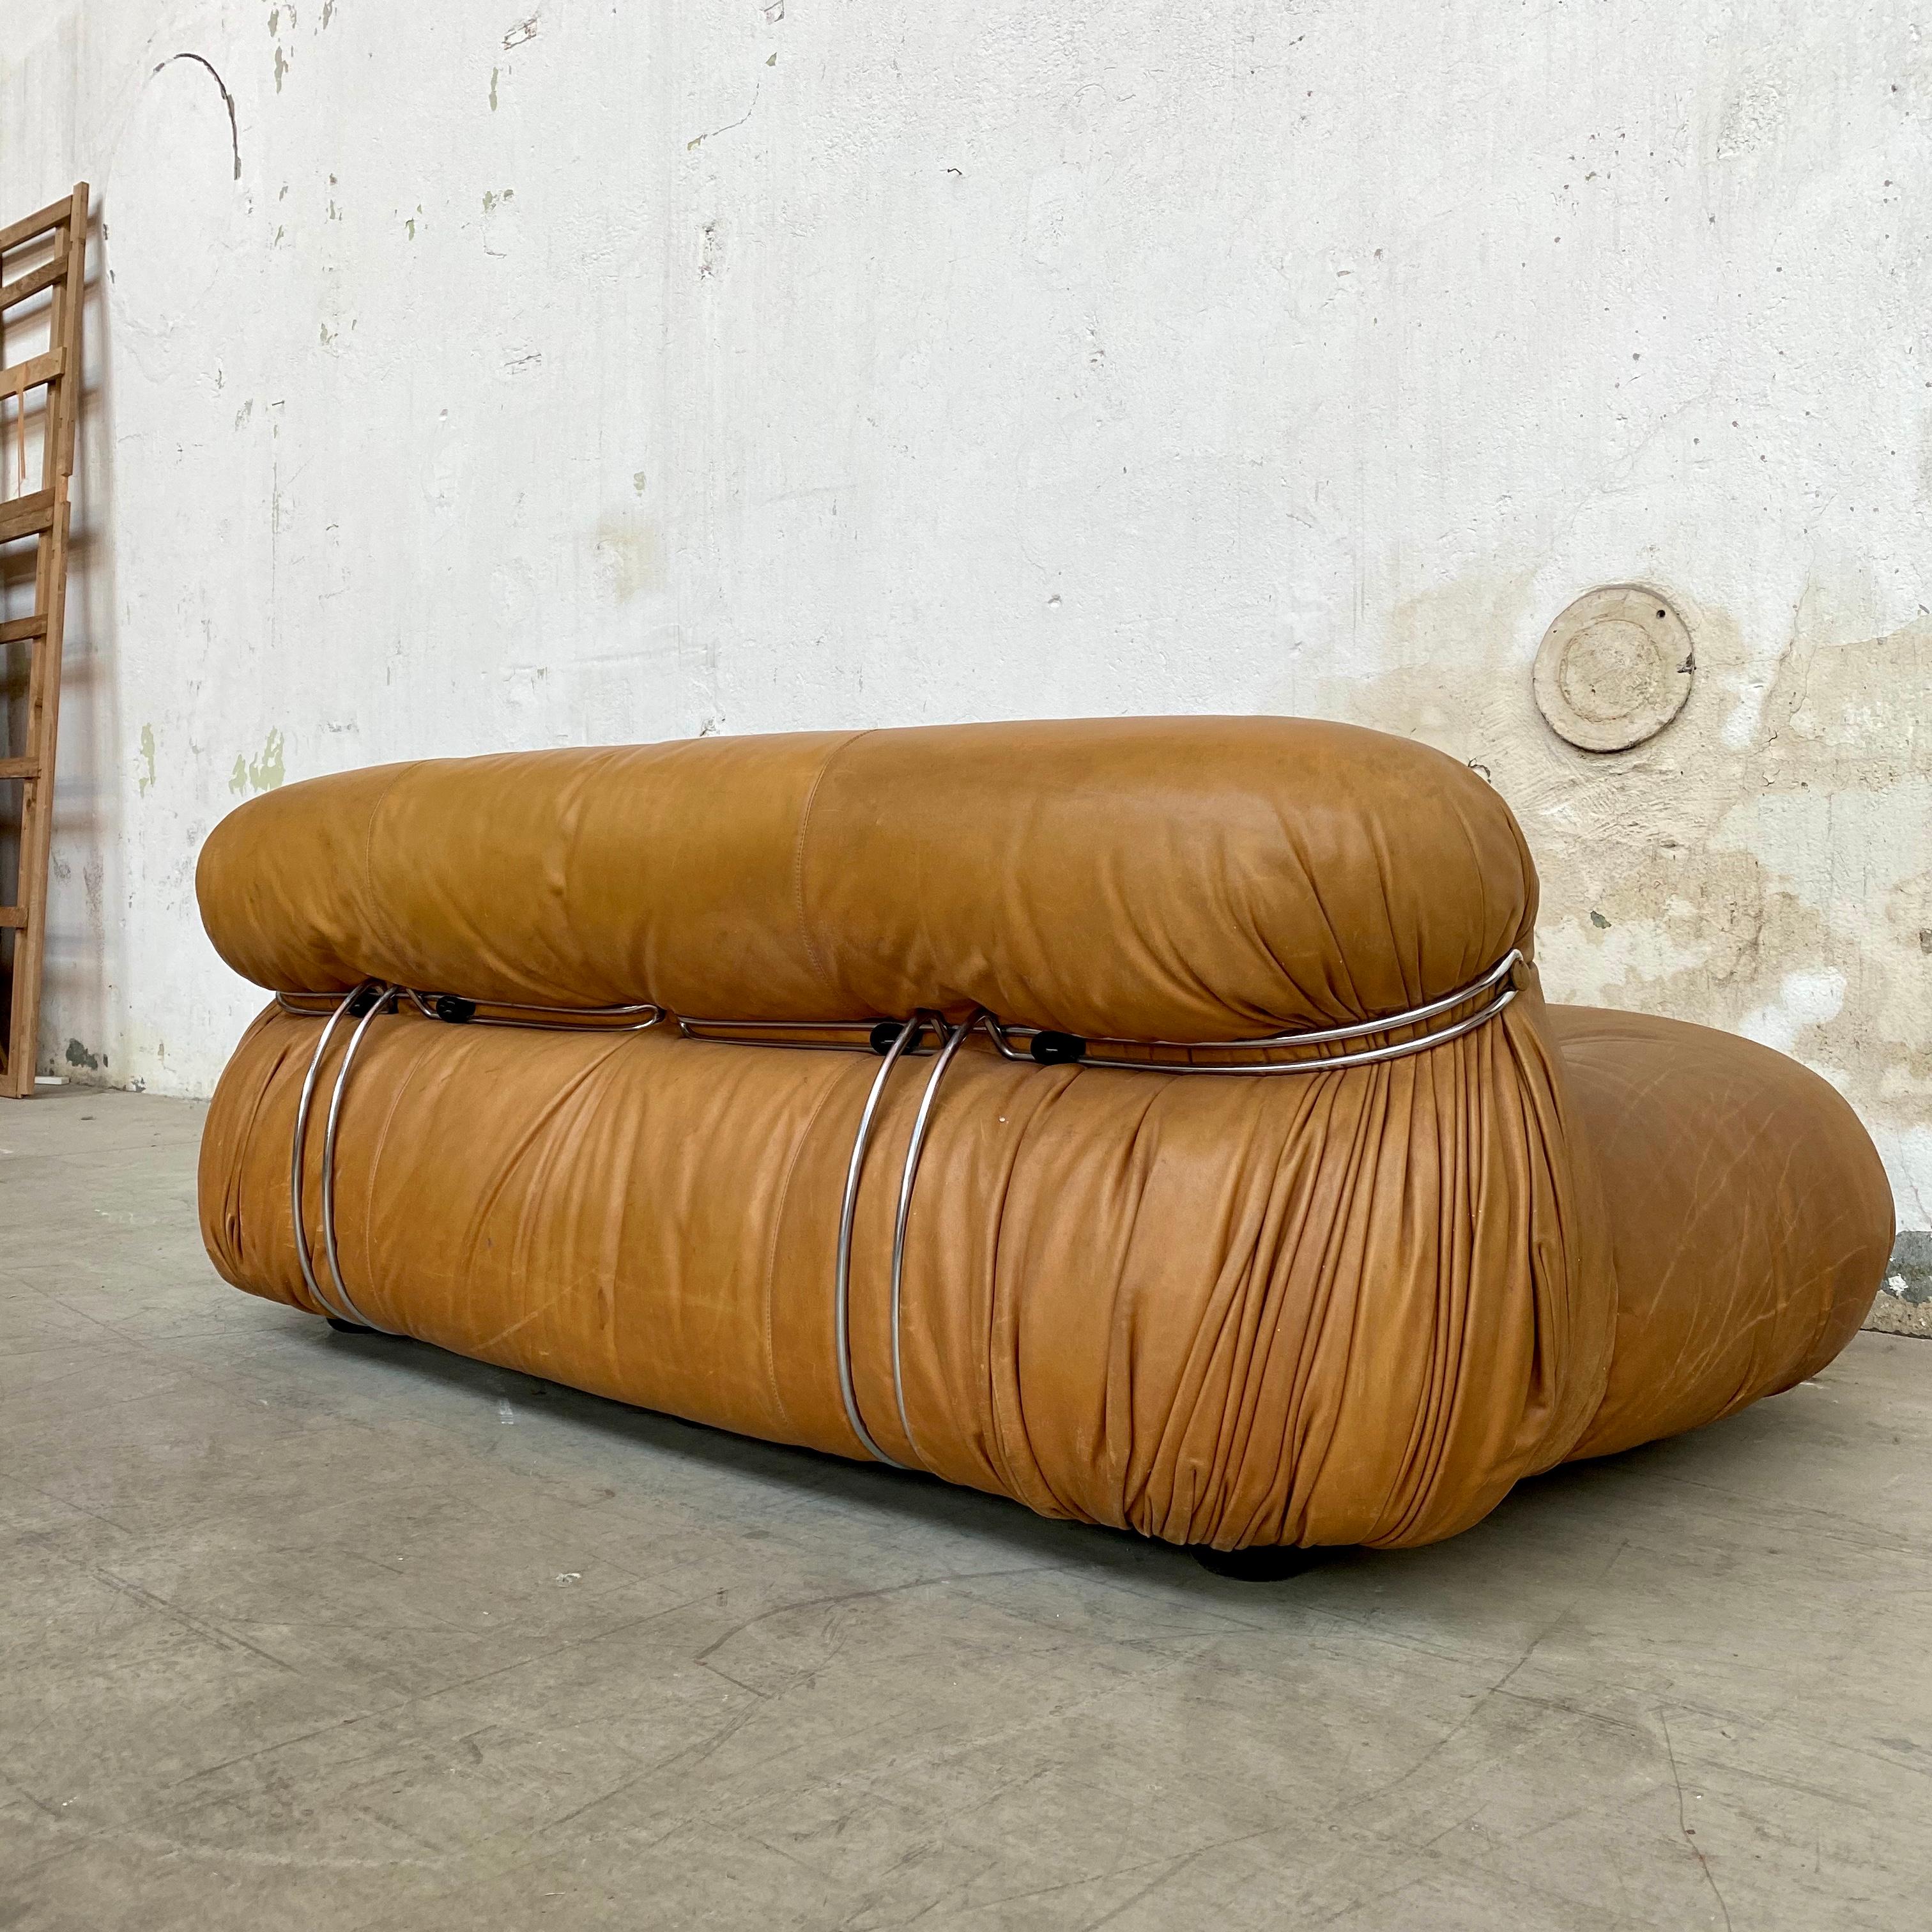 Leather Afra & Tobia Scarpa “Soriana” Living Room Set for Cassina, 1969